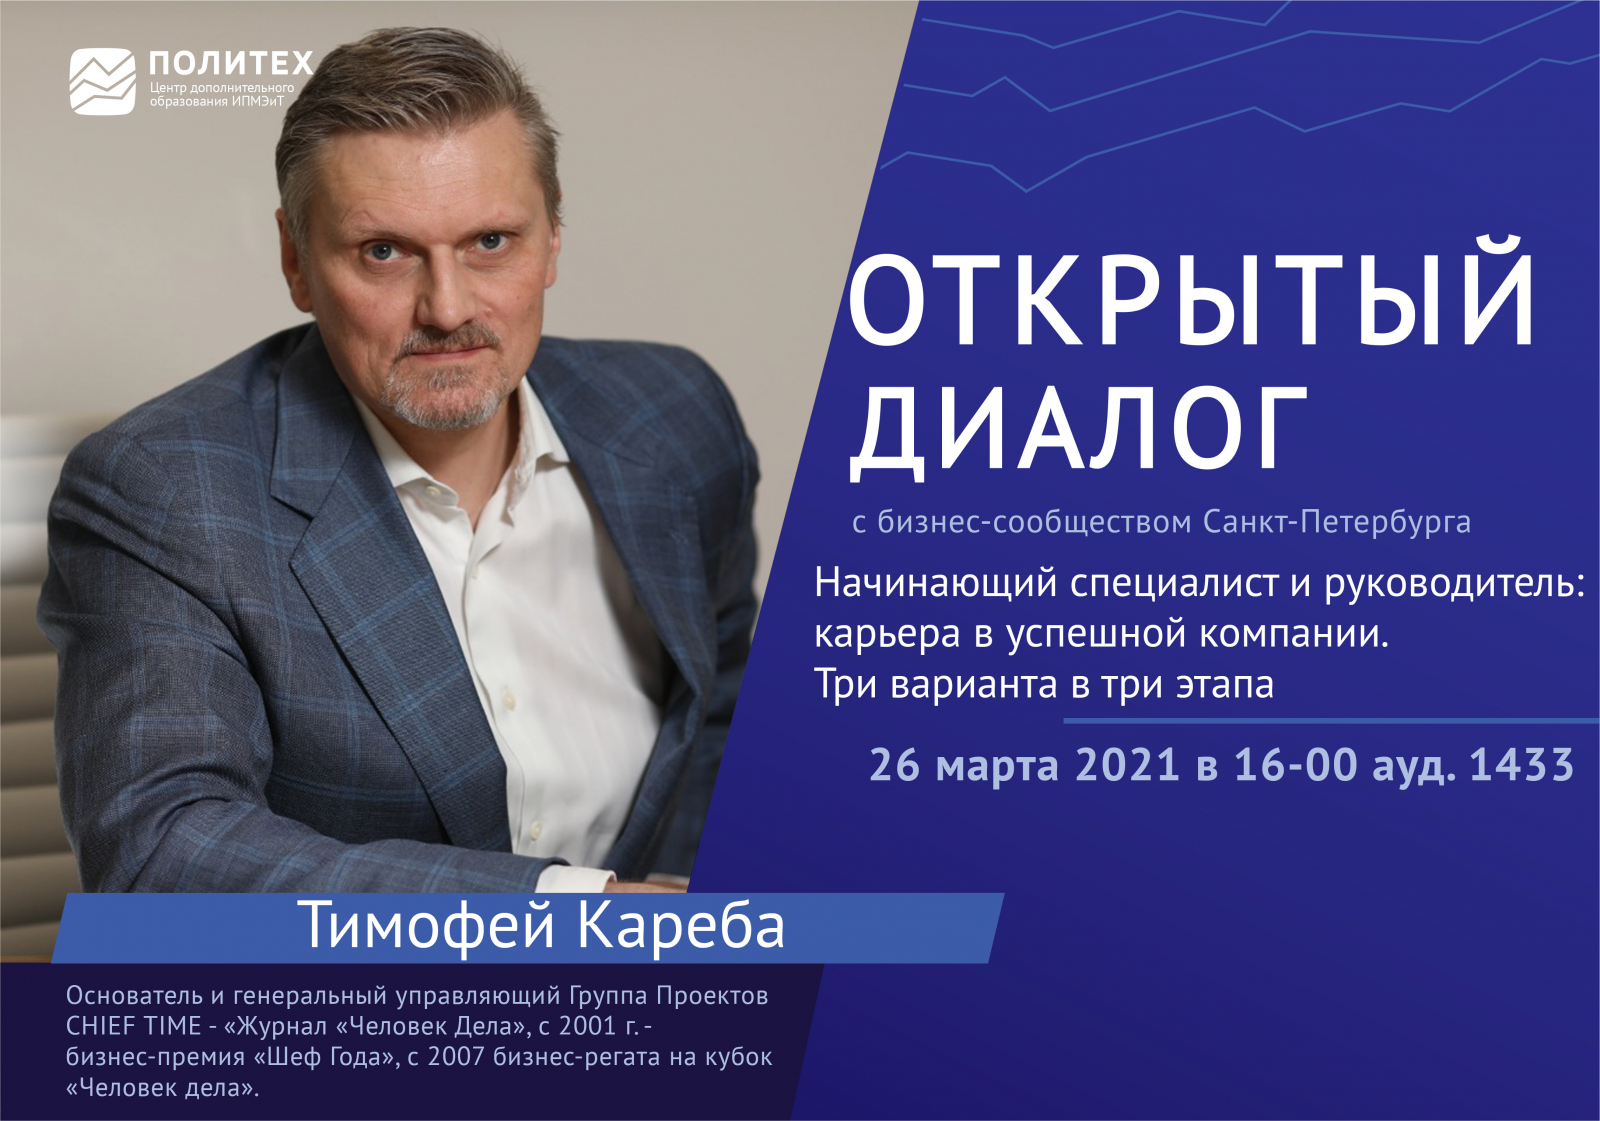 Открытые диалоги с бизнес-сообществом Санкт-Петербурга :Тимофей Кареба